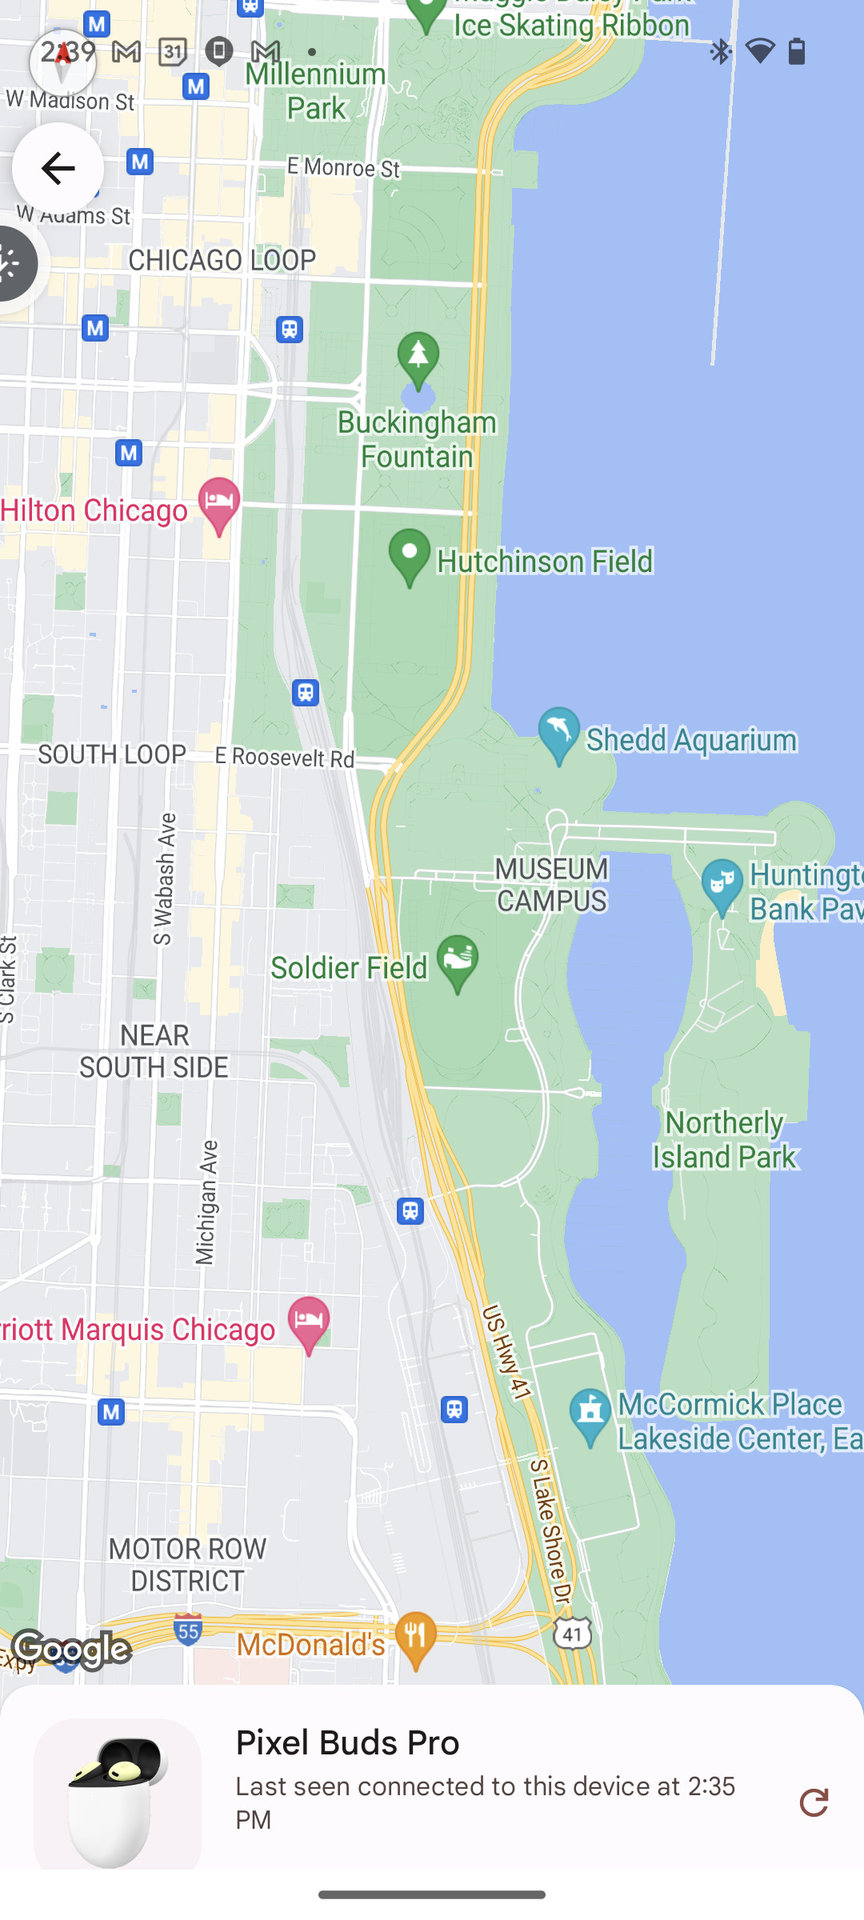 Google Pixel Buds Pro find my device map